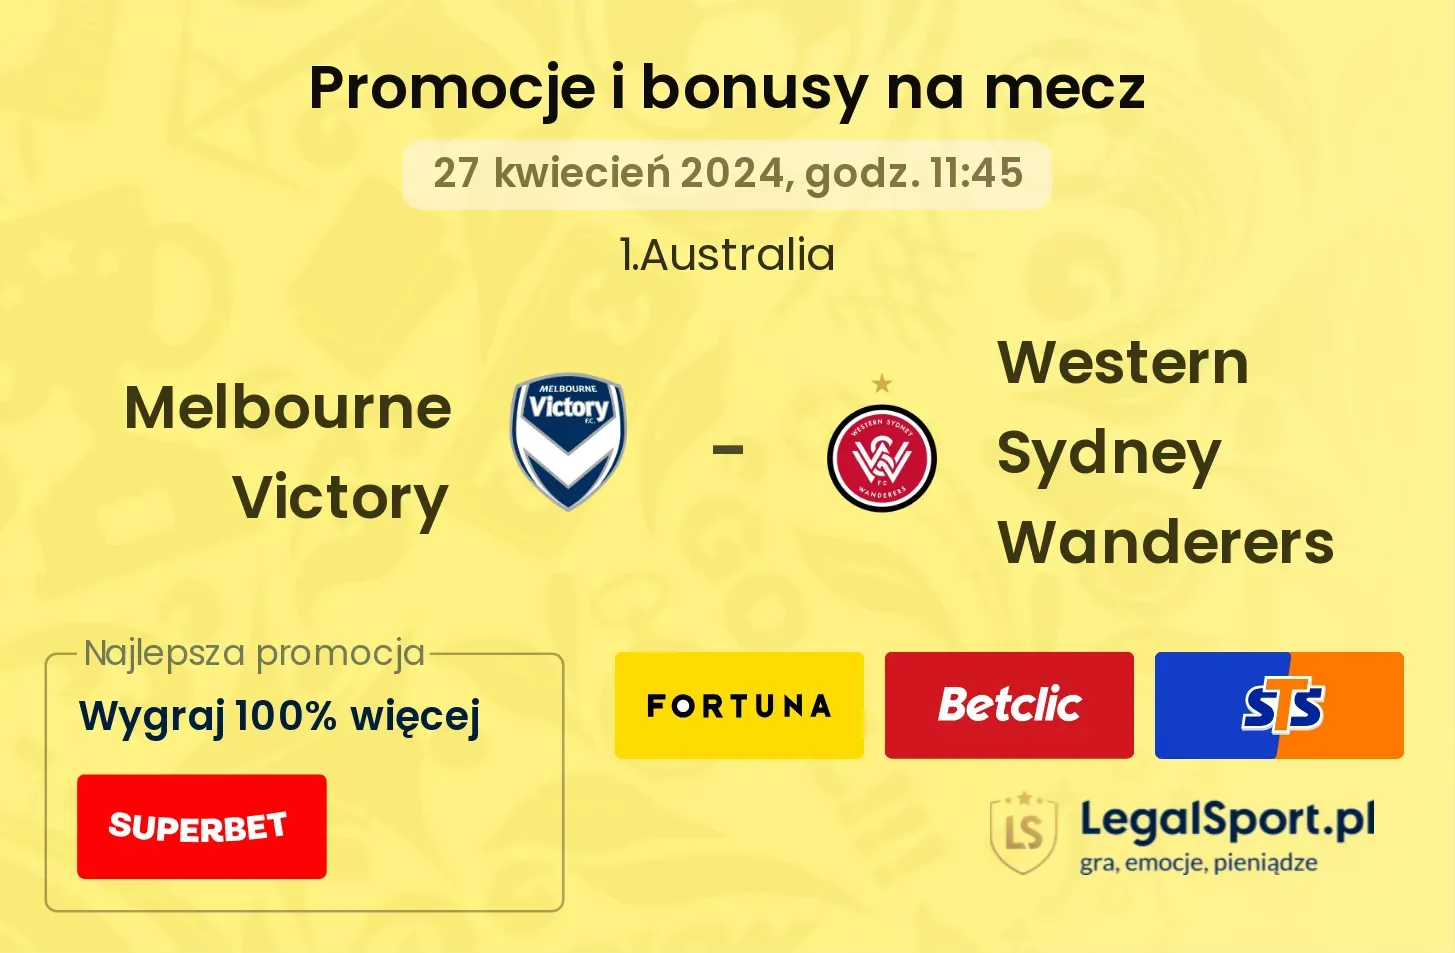 Melbourne Victory - Western Sydney Wanderers promocje bonusy na mecz